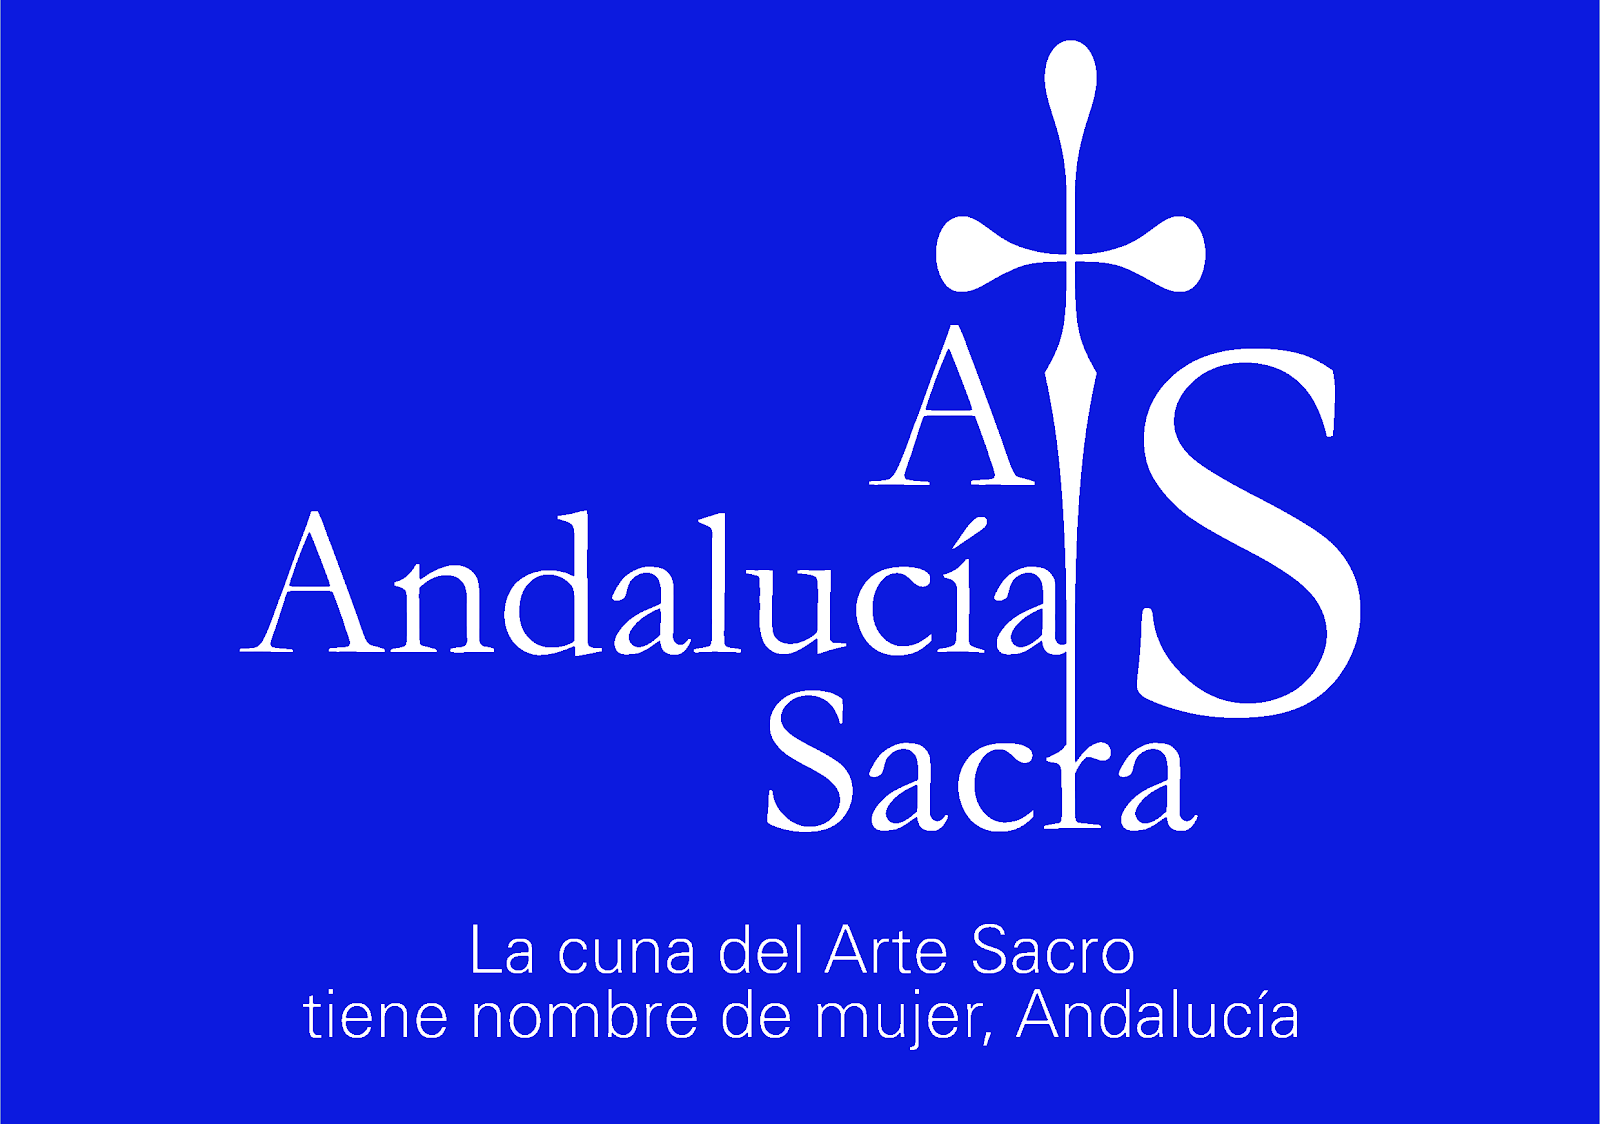 Andalucía Sacra